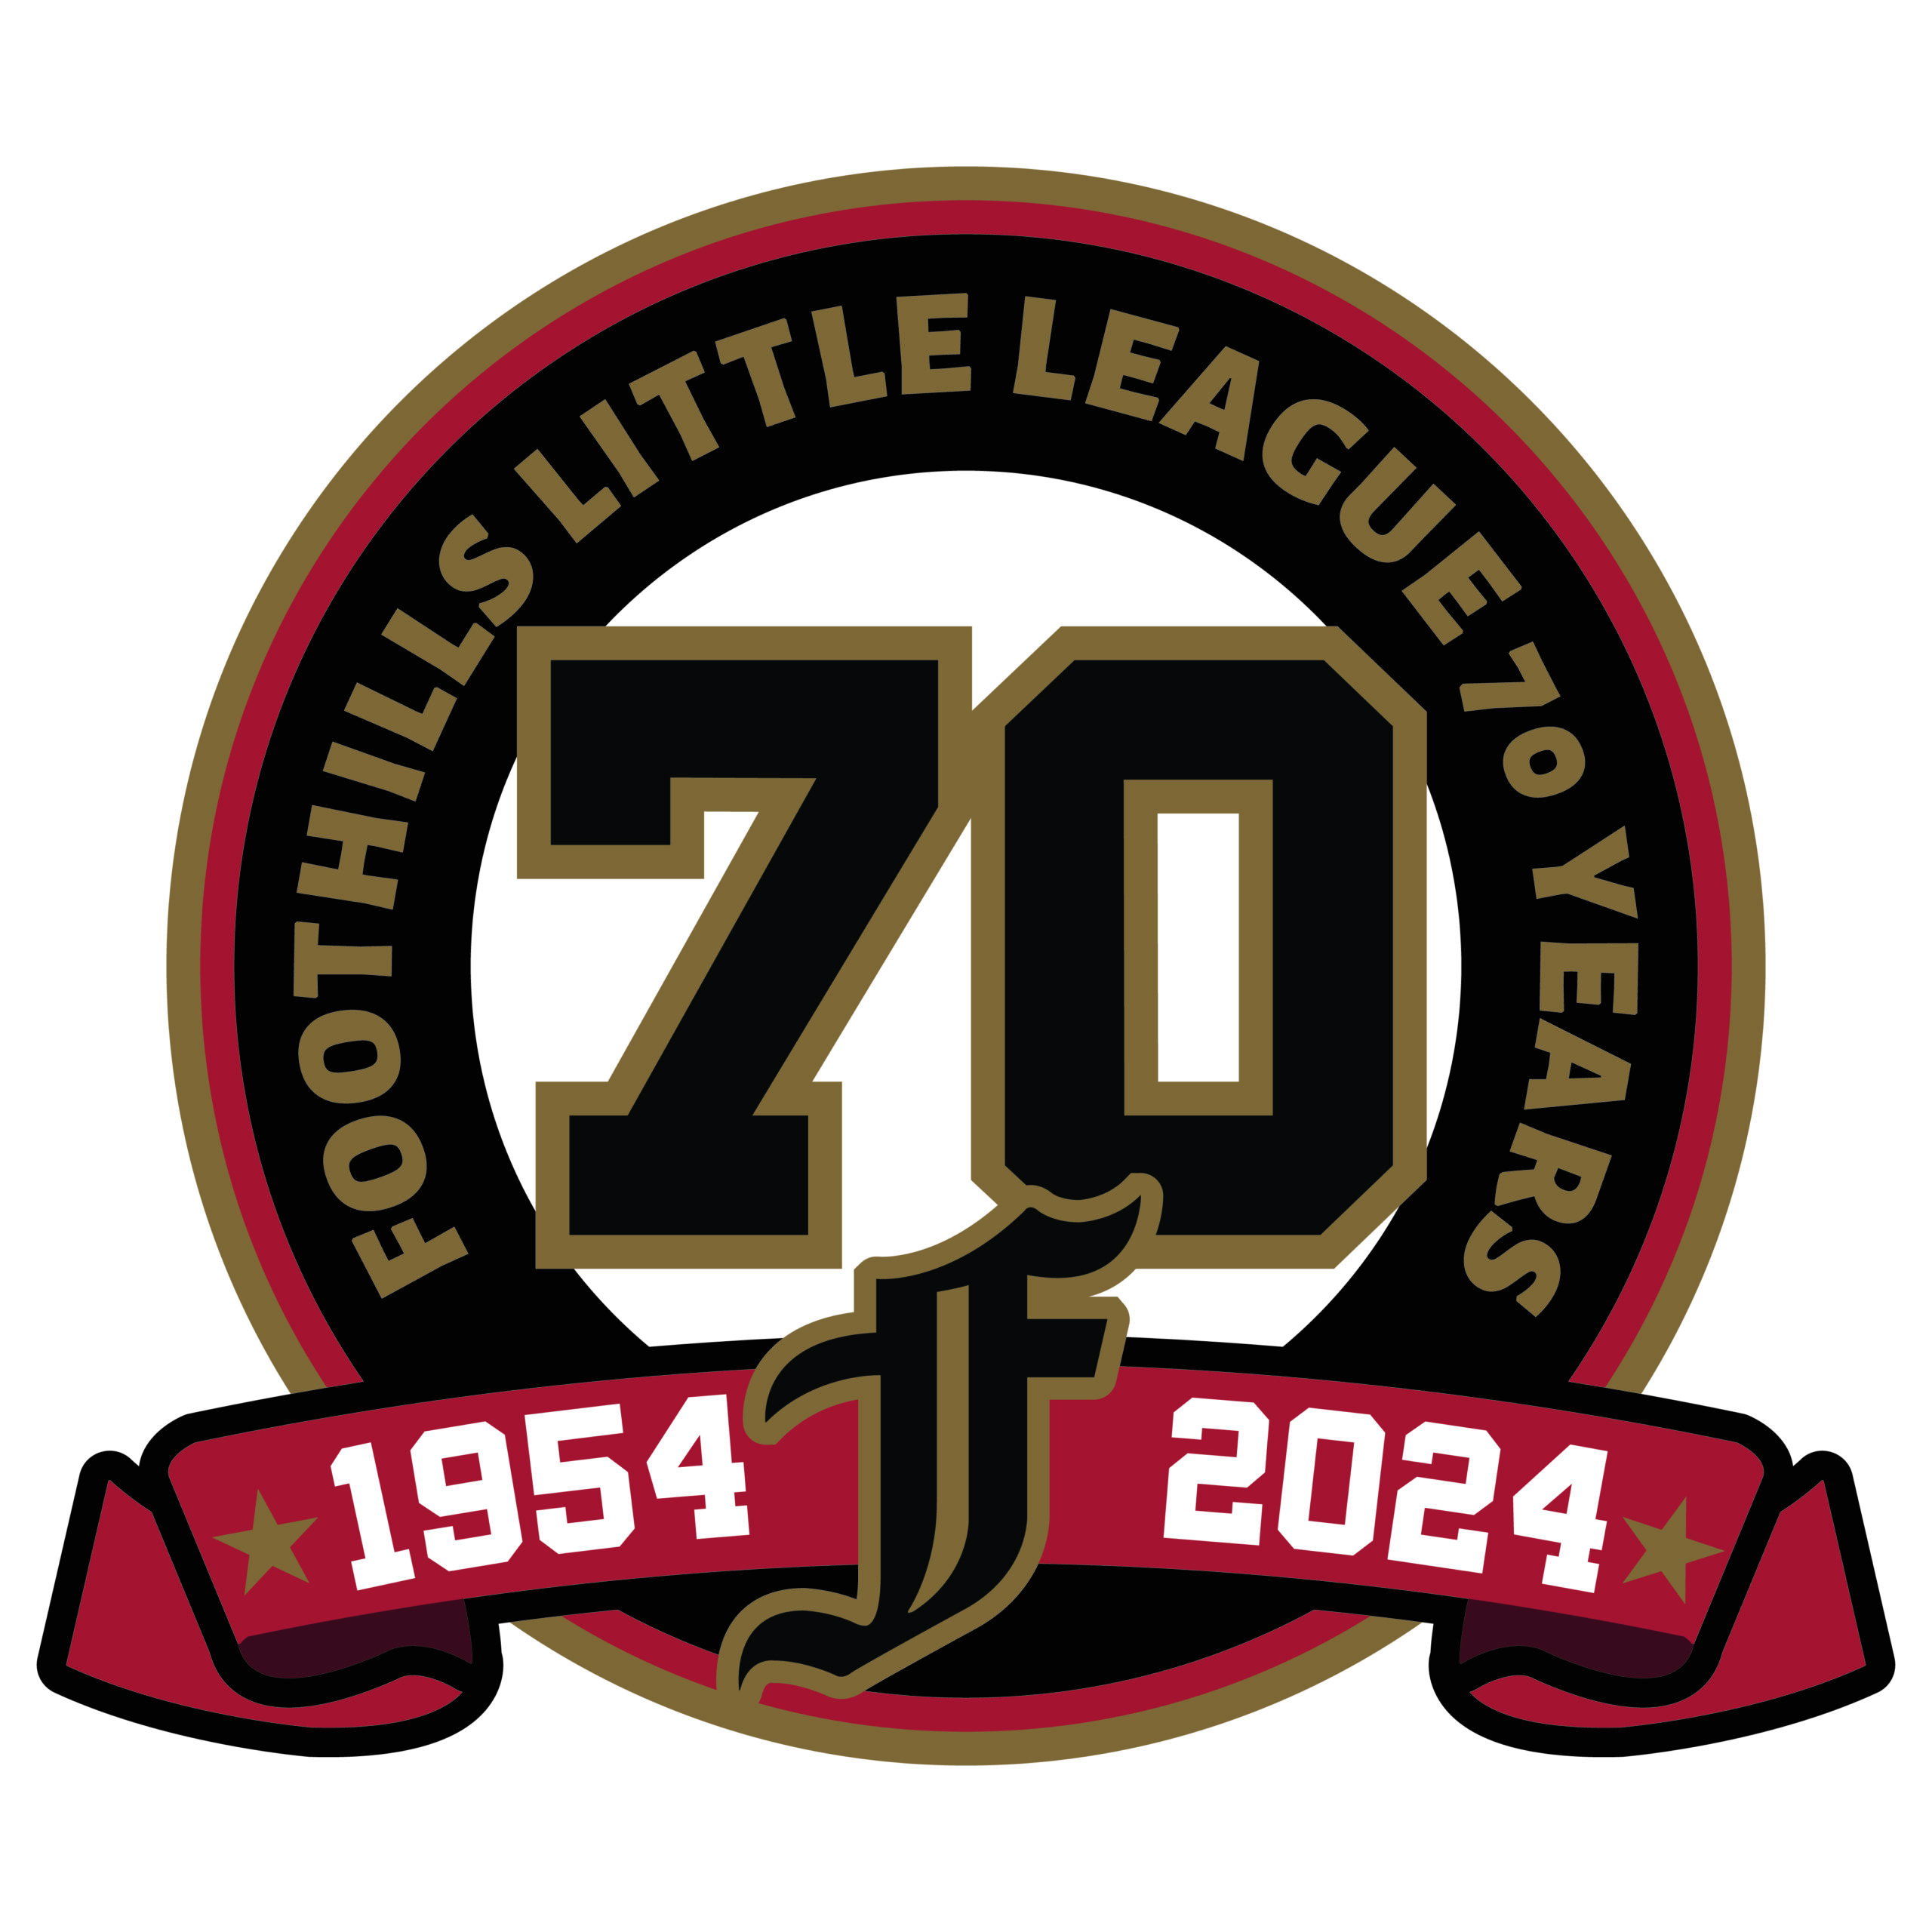 Calgary Foothills Little League